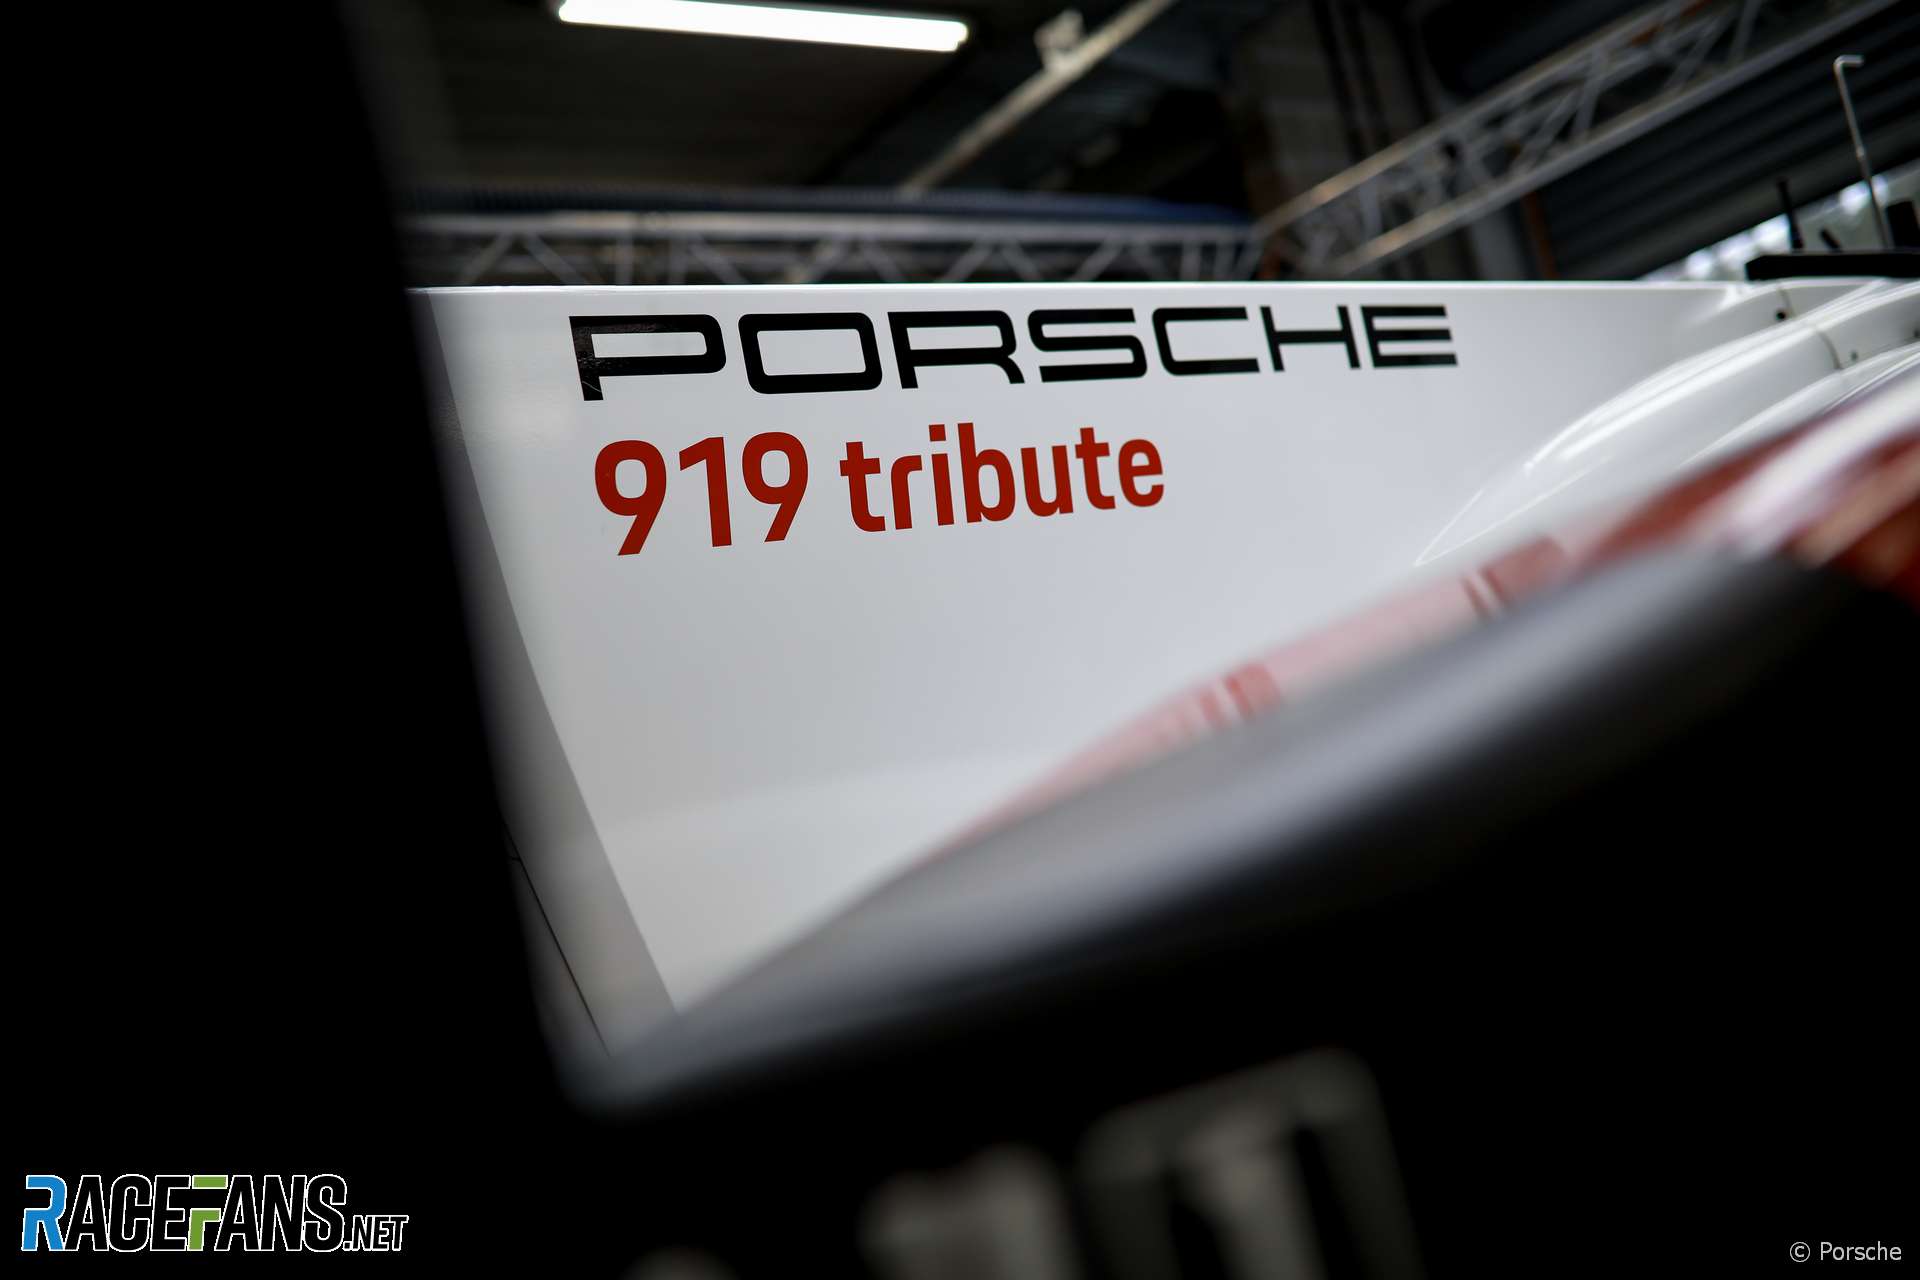 Porsche 919 Hybrid Evo, Spa-Francorchamps, 2018